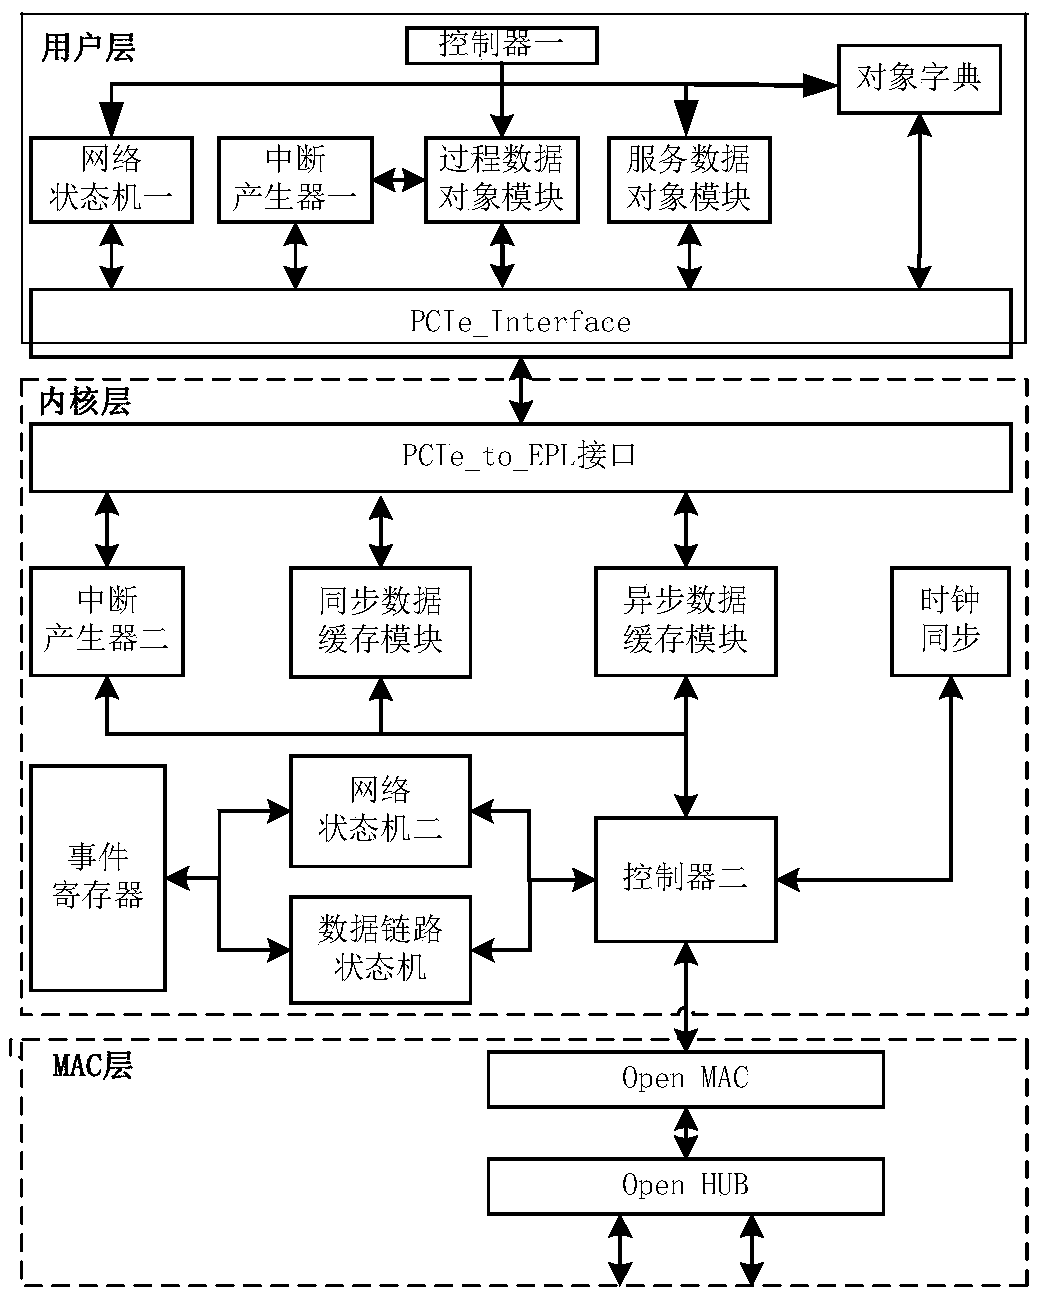 Design method of master/slave station cards for implementing Powerlink industrial real-time Ethernet communication